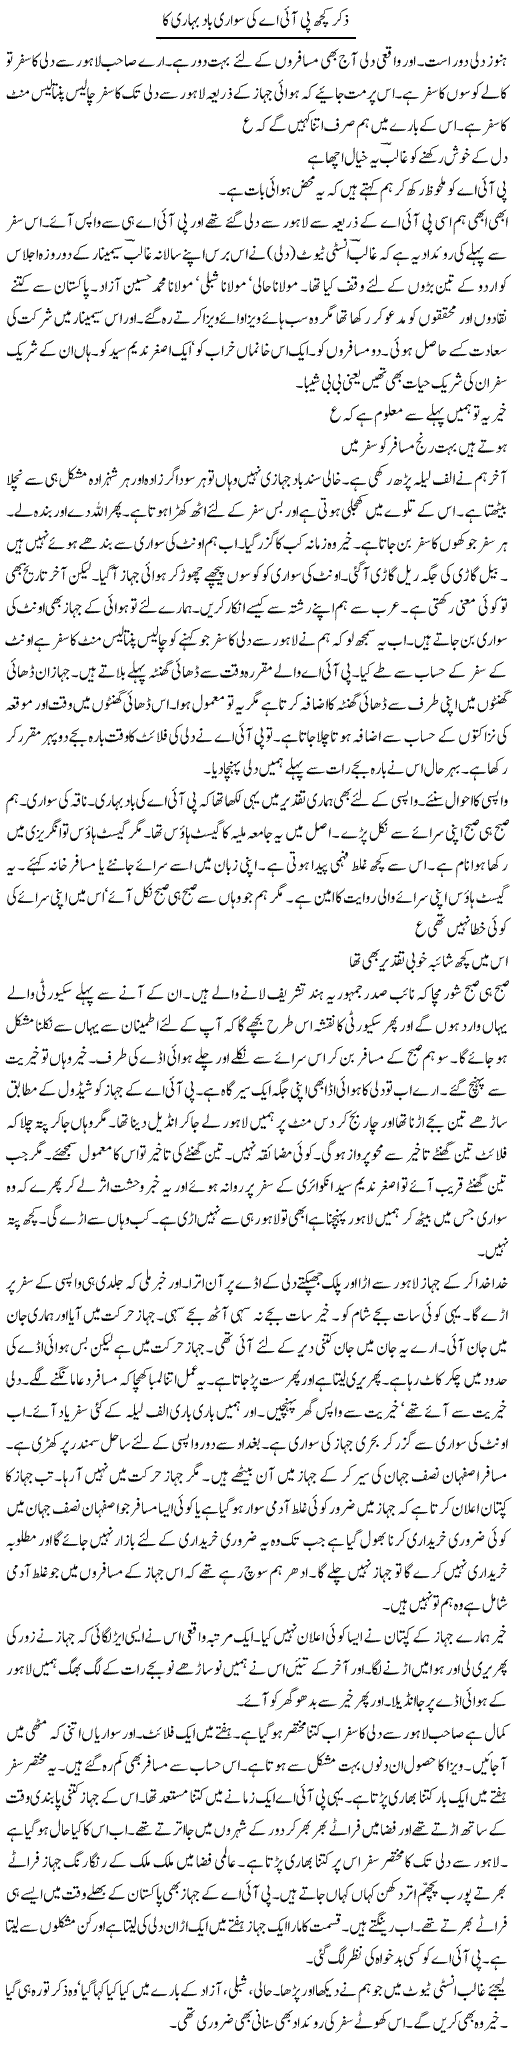 Zikar Kunch Pti A Ki Sawari Bad Bahari Ka | Intizar Hussain | Daily Urdu Columns